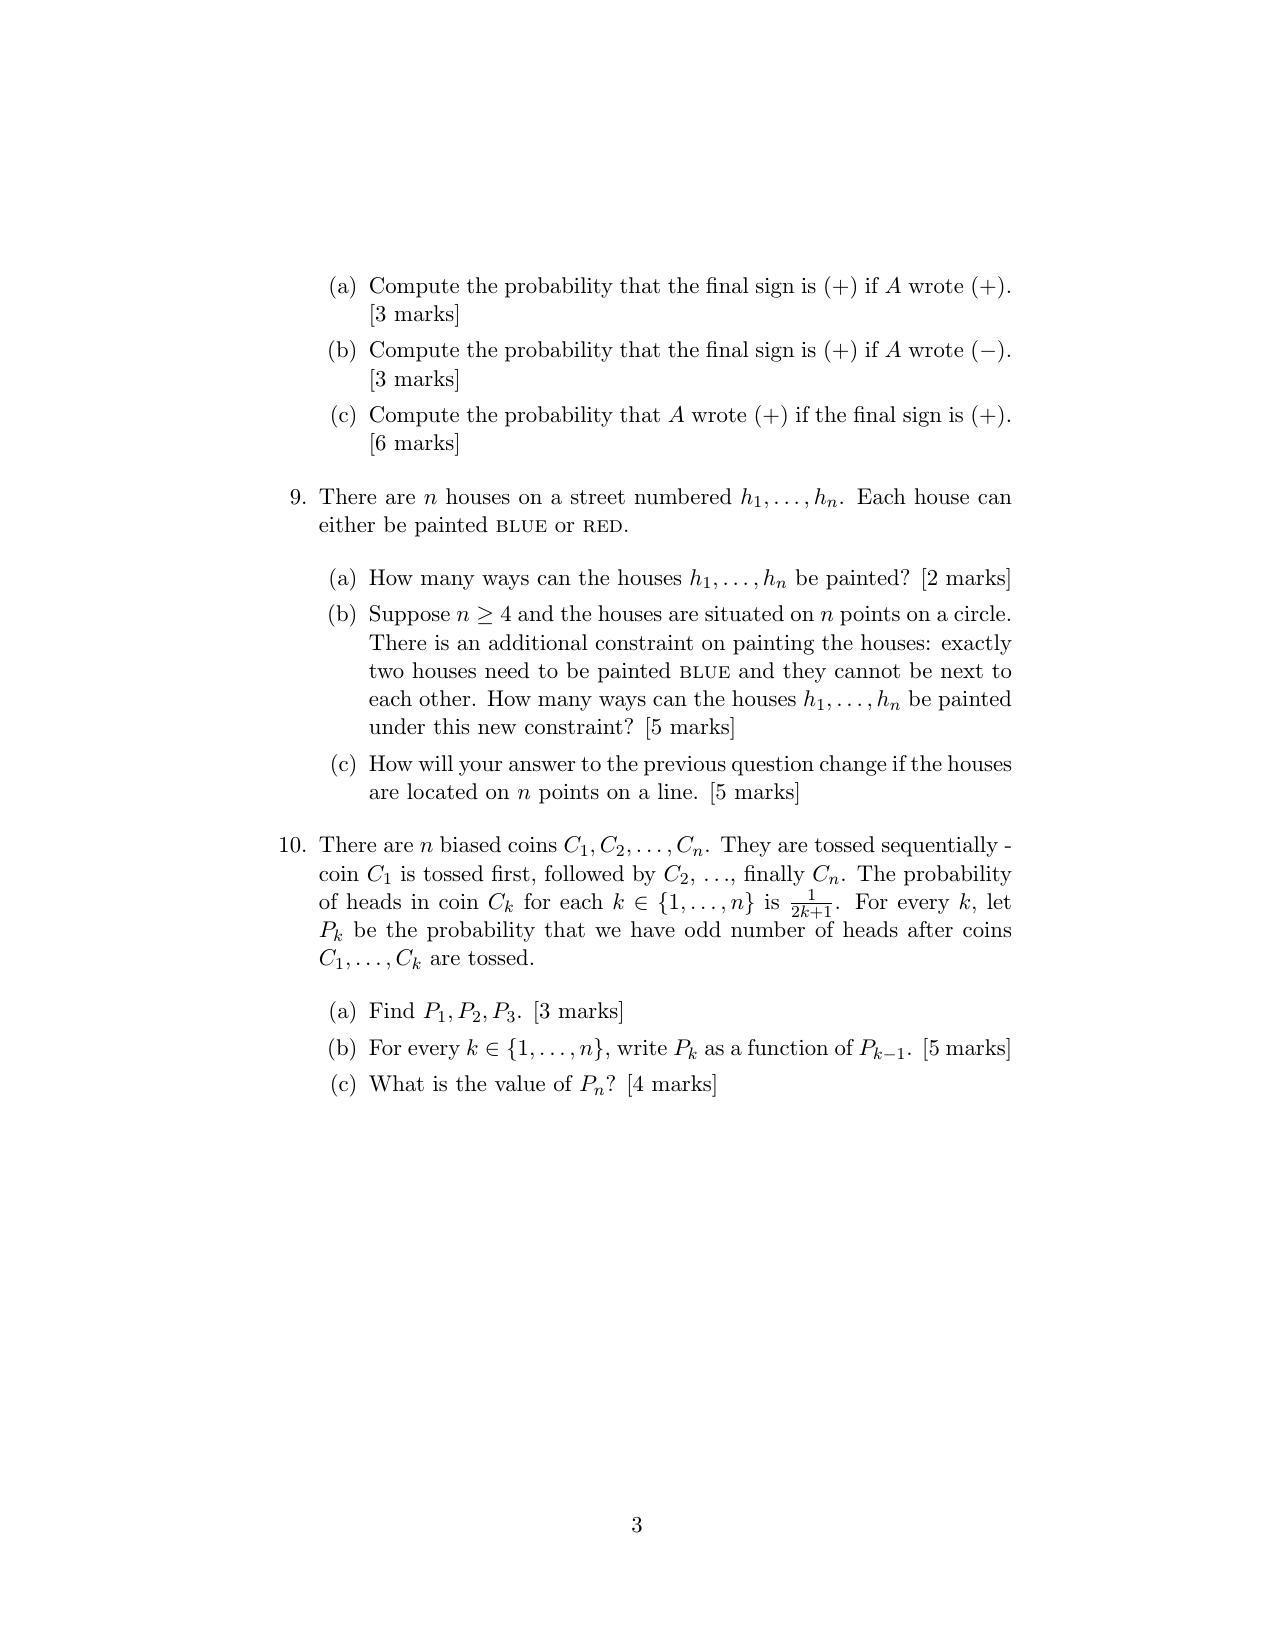 ISI Admission Test JRF in Quantitative Economics QEA 2018 Sample Paper - Page 3